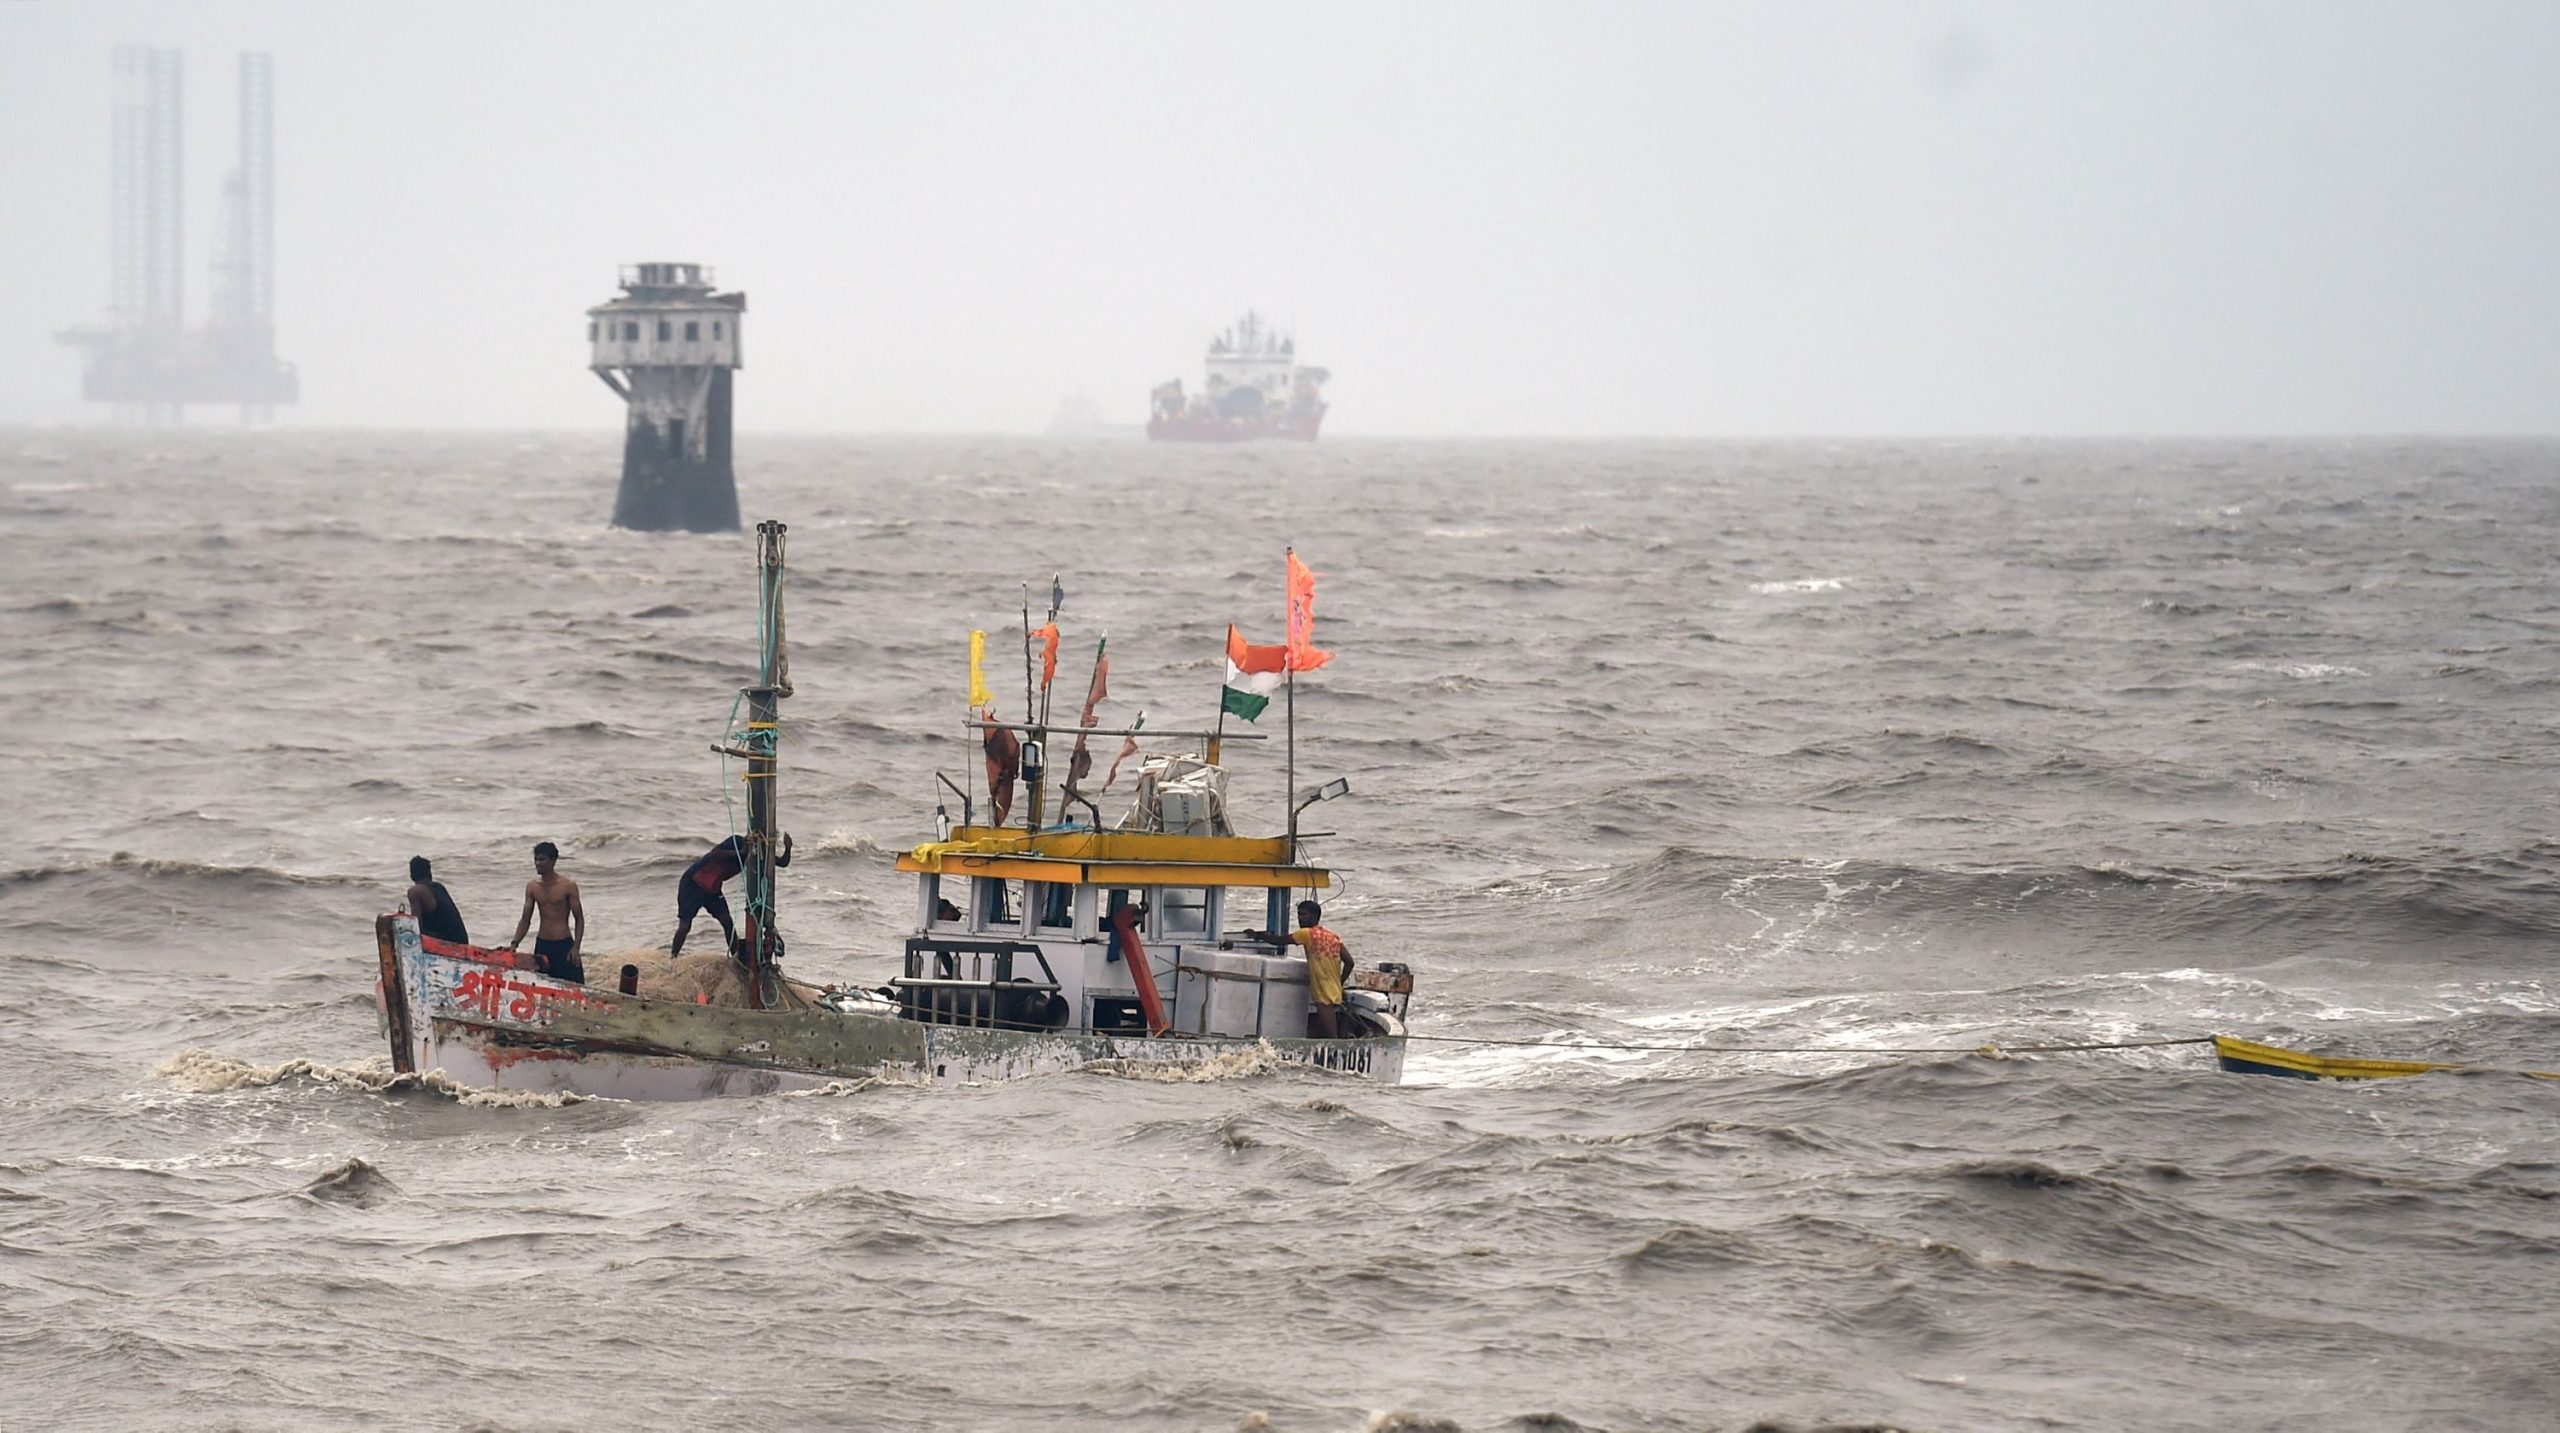 ‘Ignored Cyclone Tauktae warnings’: P305 survivors blame barge captain